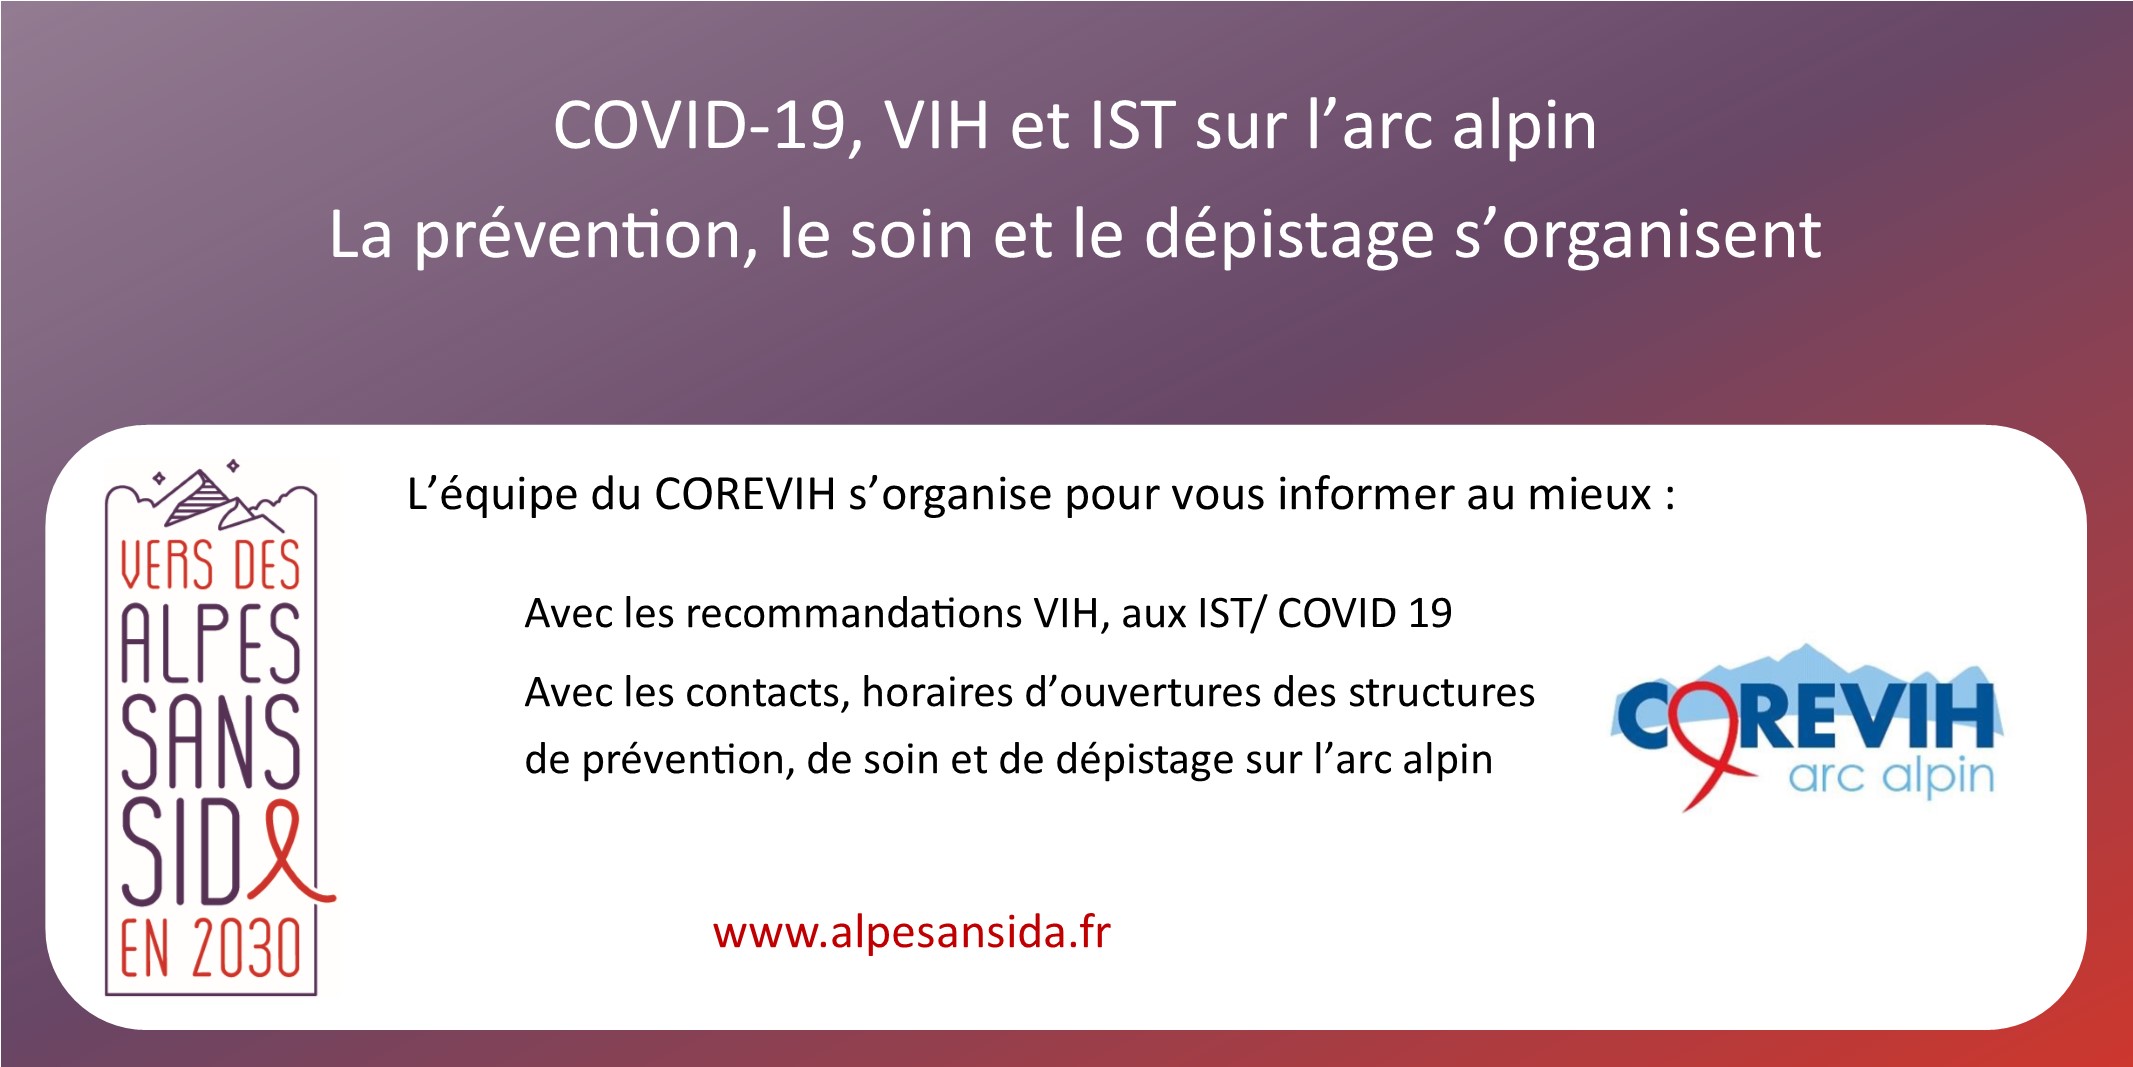 Alpes sans sida : information COVID 19 VIH et IST